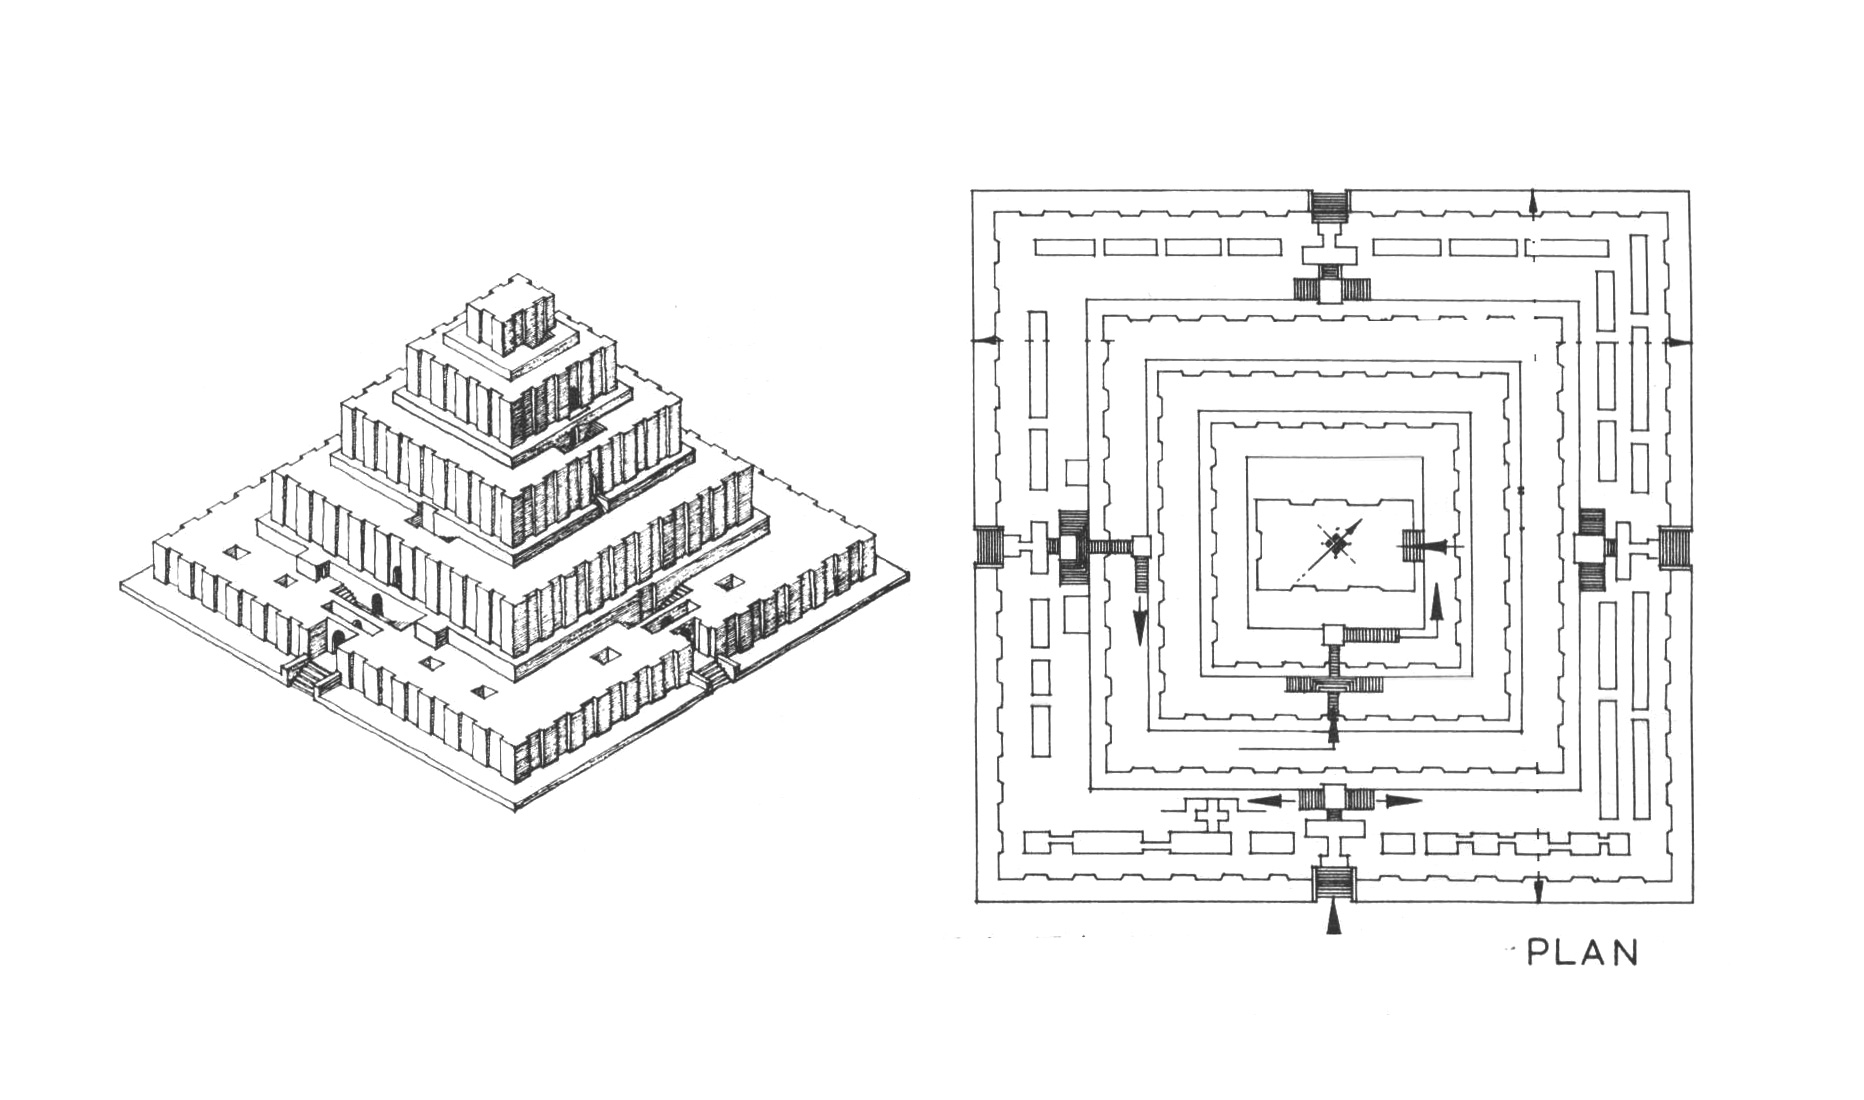 Axonometric and floor plan of a Ziggurat